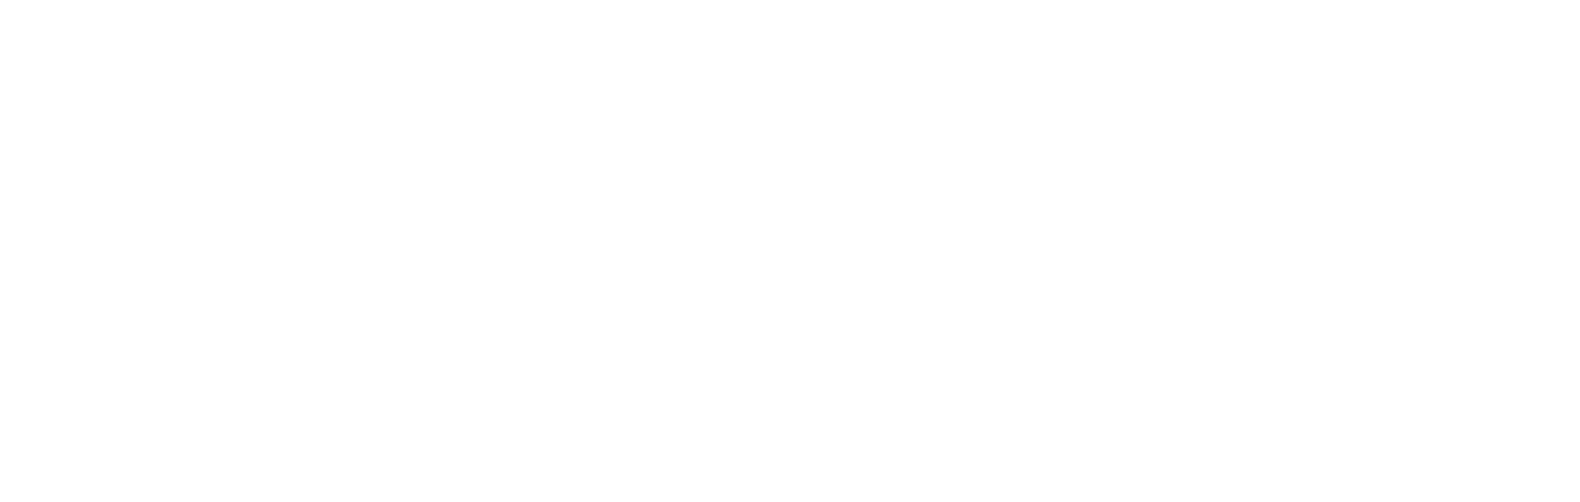 Paragon 28 Logo groß für dunkle Hintergründe (transparentes PNG)